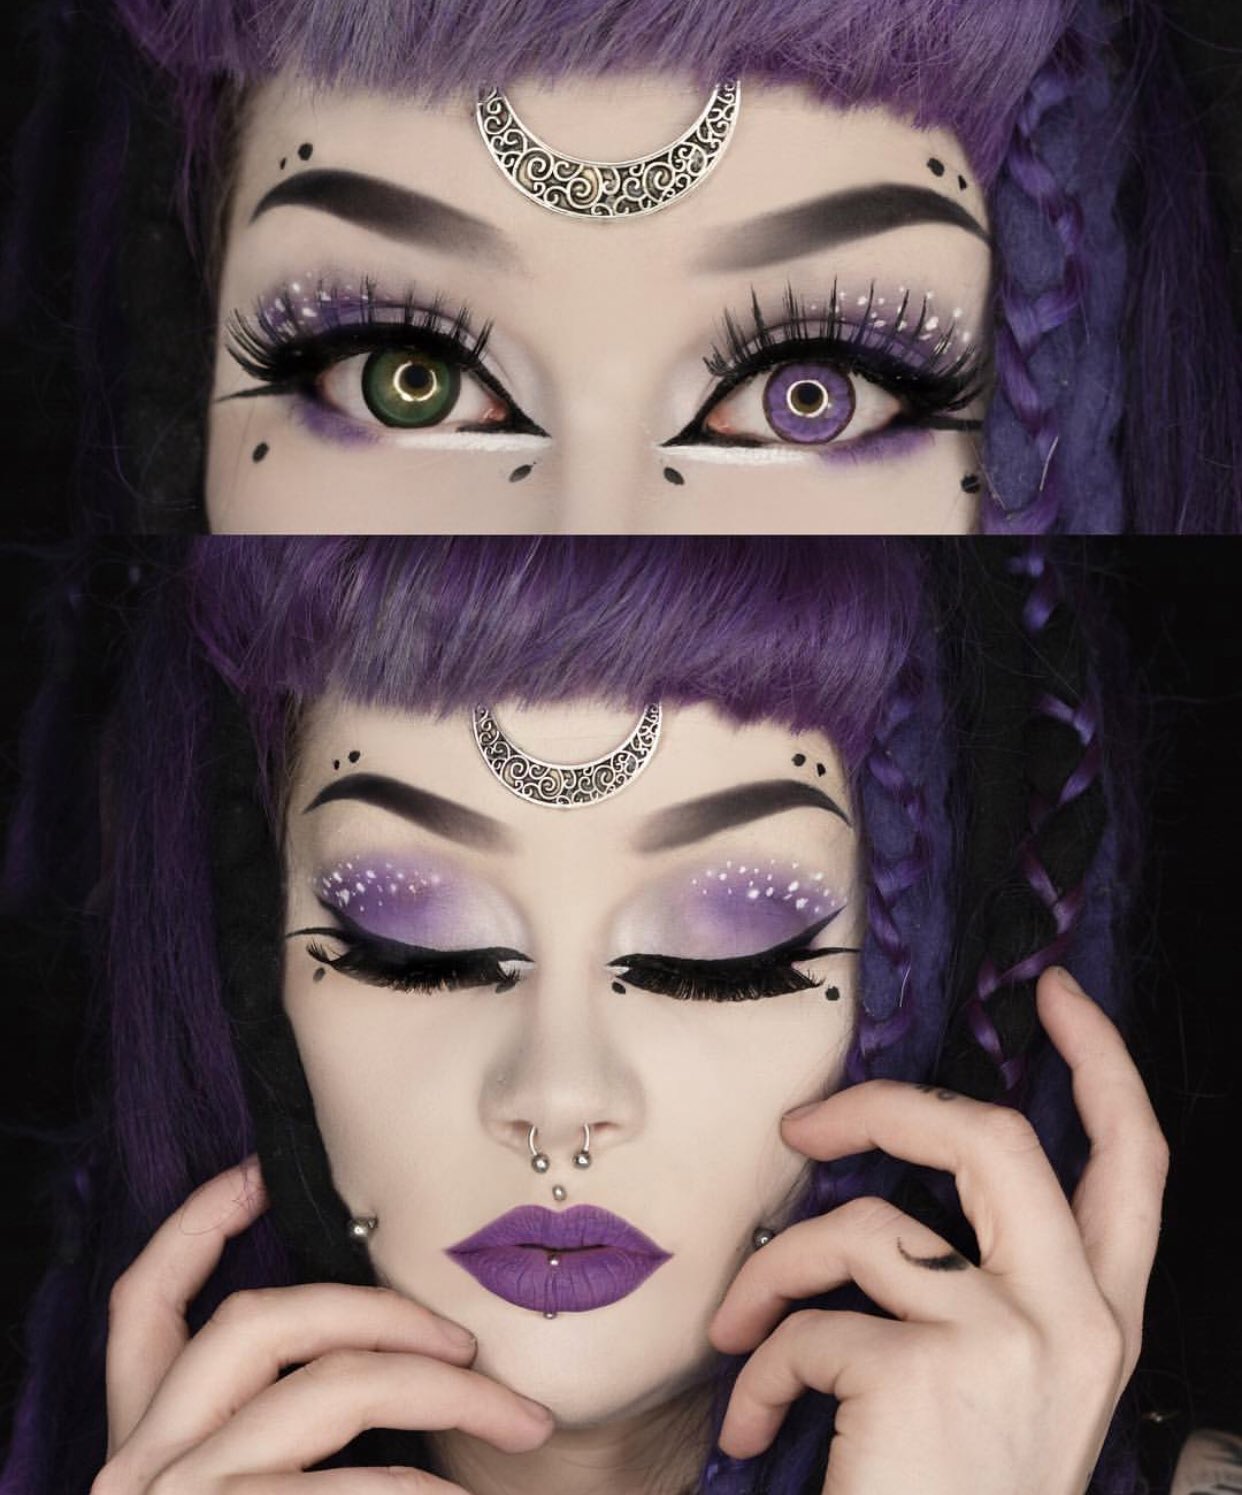 Minearbejder træt olie Spiral Direct on Twitter: "Her makeup! 🖤💜🖤 📸 Bathorybat #Makeup #beauty  #goth #gothic #gothgoth #bblogger witch #witchesofinstagram #pagan #wiccan  #alt #purple https://t.co/MB2gZetFDA" / Twitter